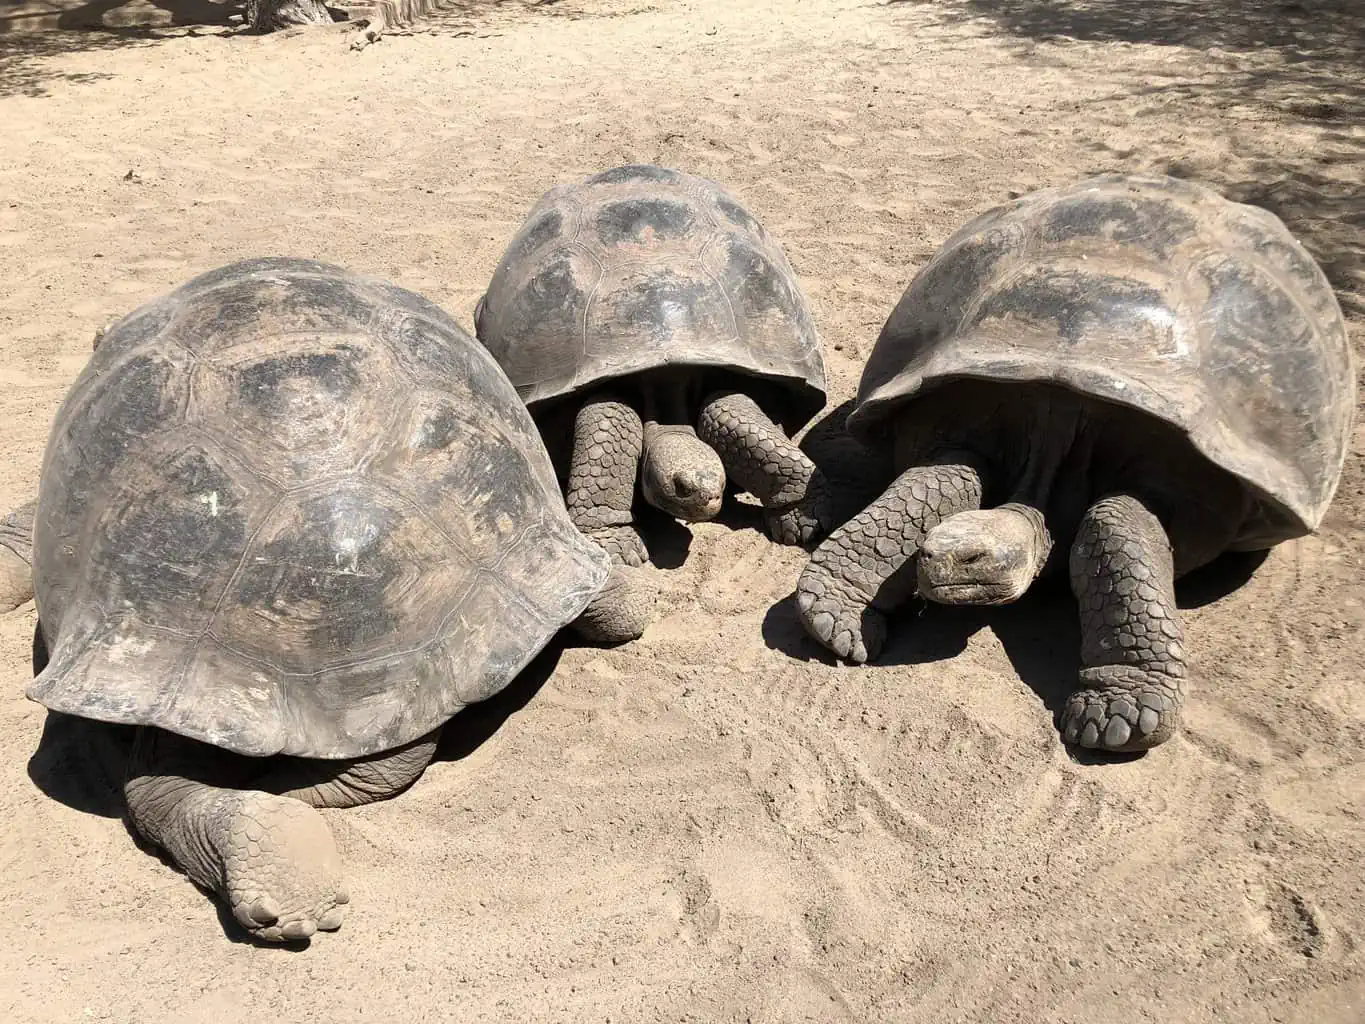 Galapagos Sea Turtles and Tortoises